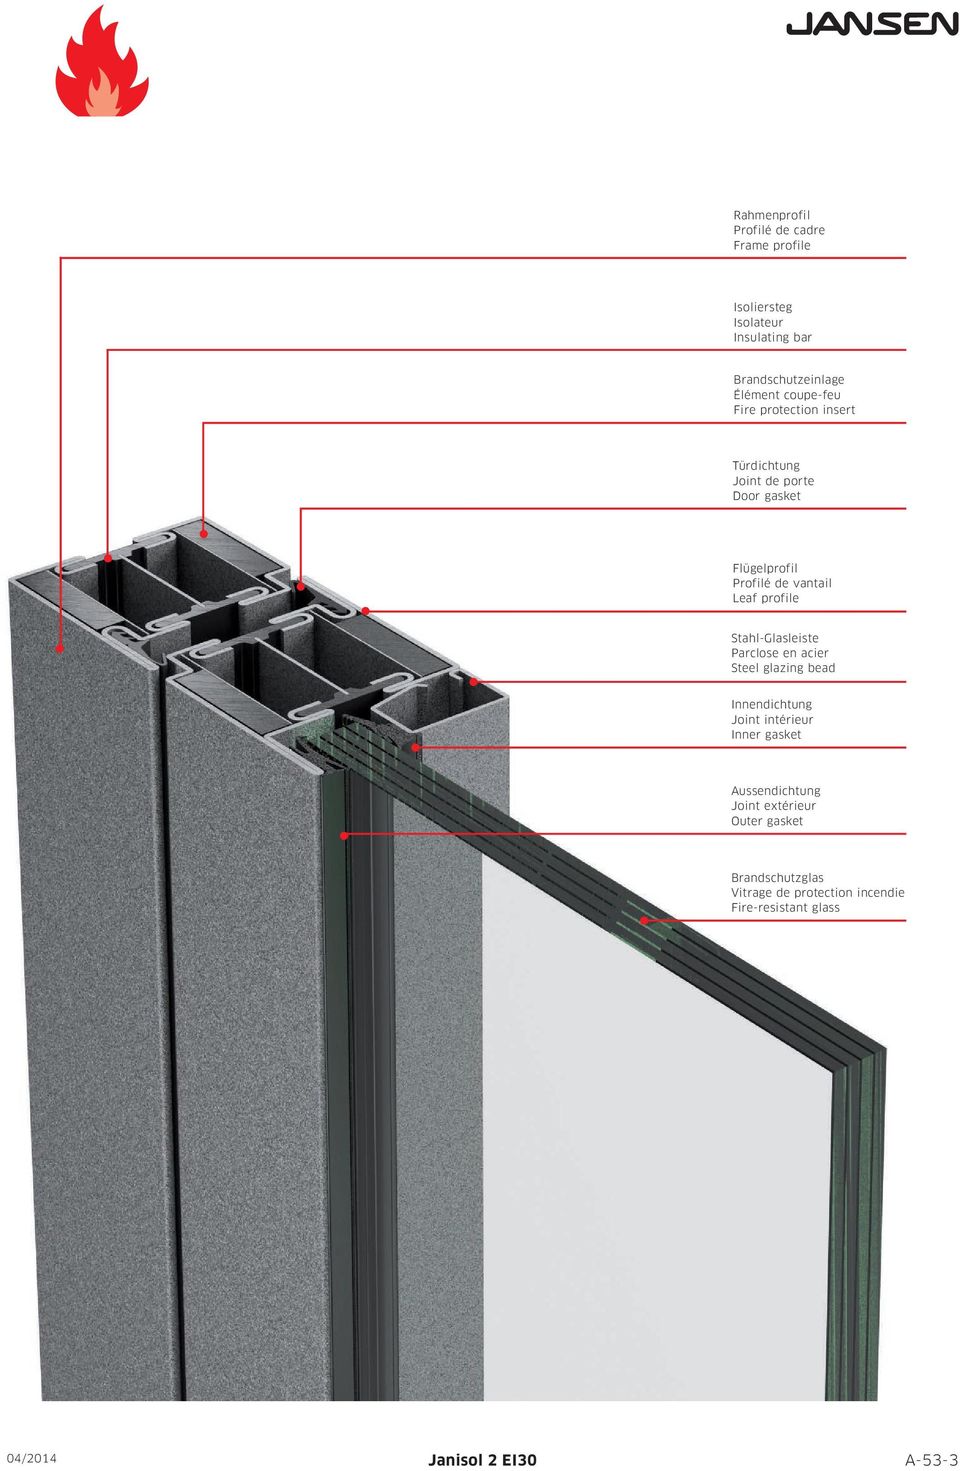 profile Stahl-Glasleiste Parclose en acier Steel glazing bead Innendichtung Joint intérieur Inner gasket